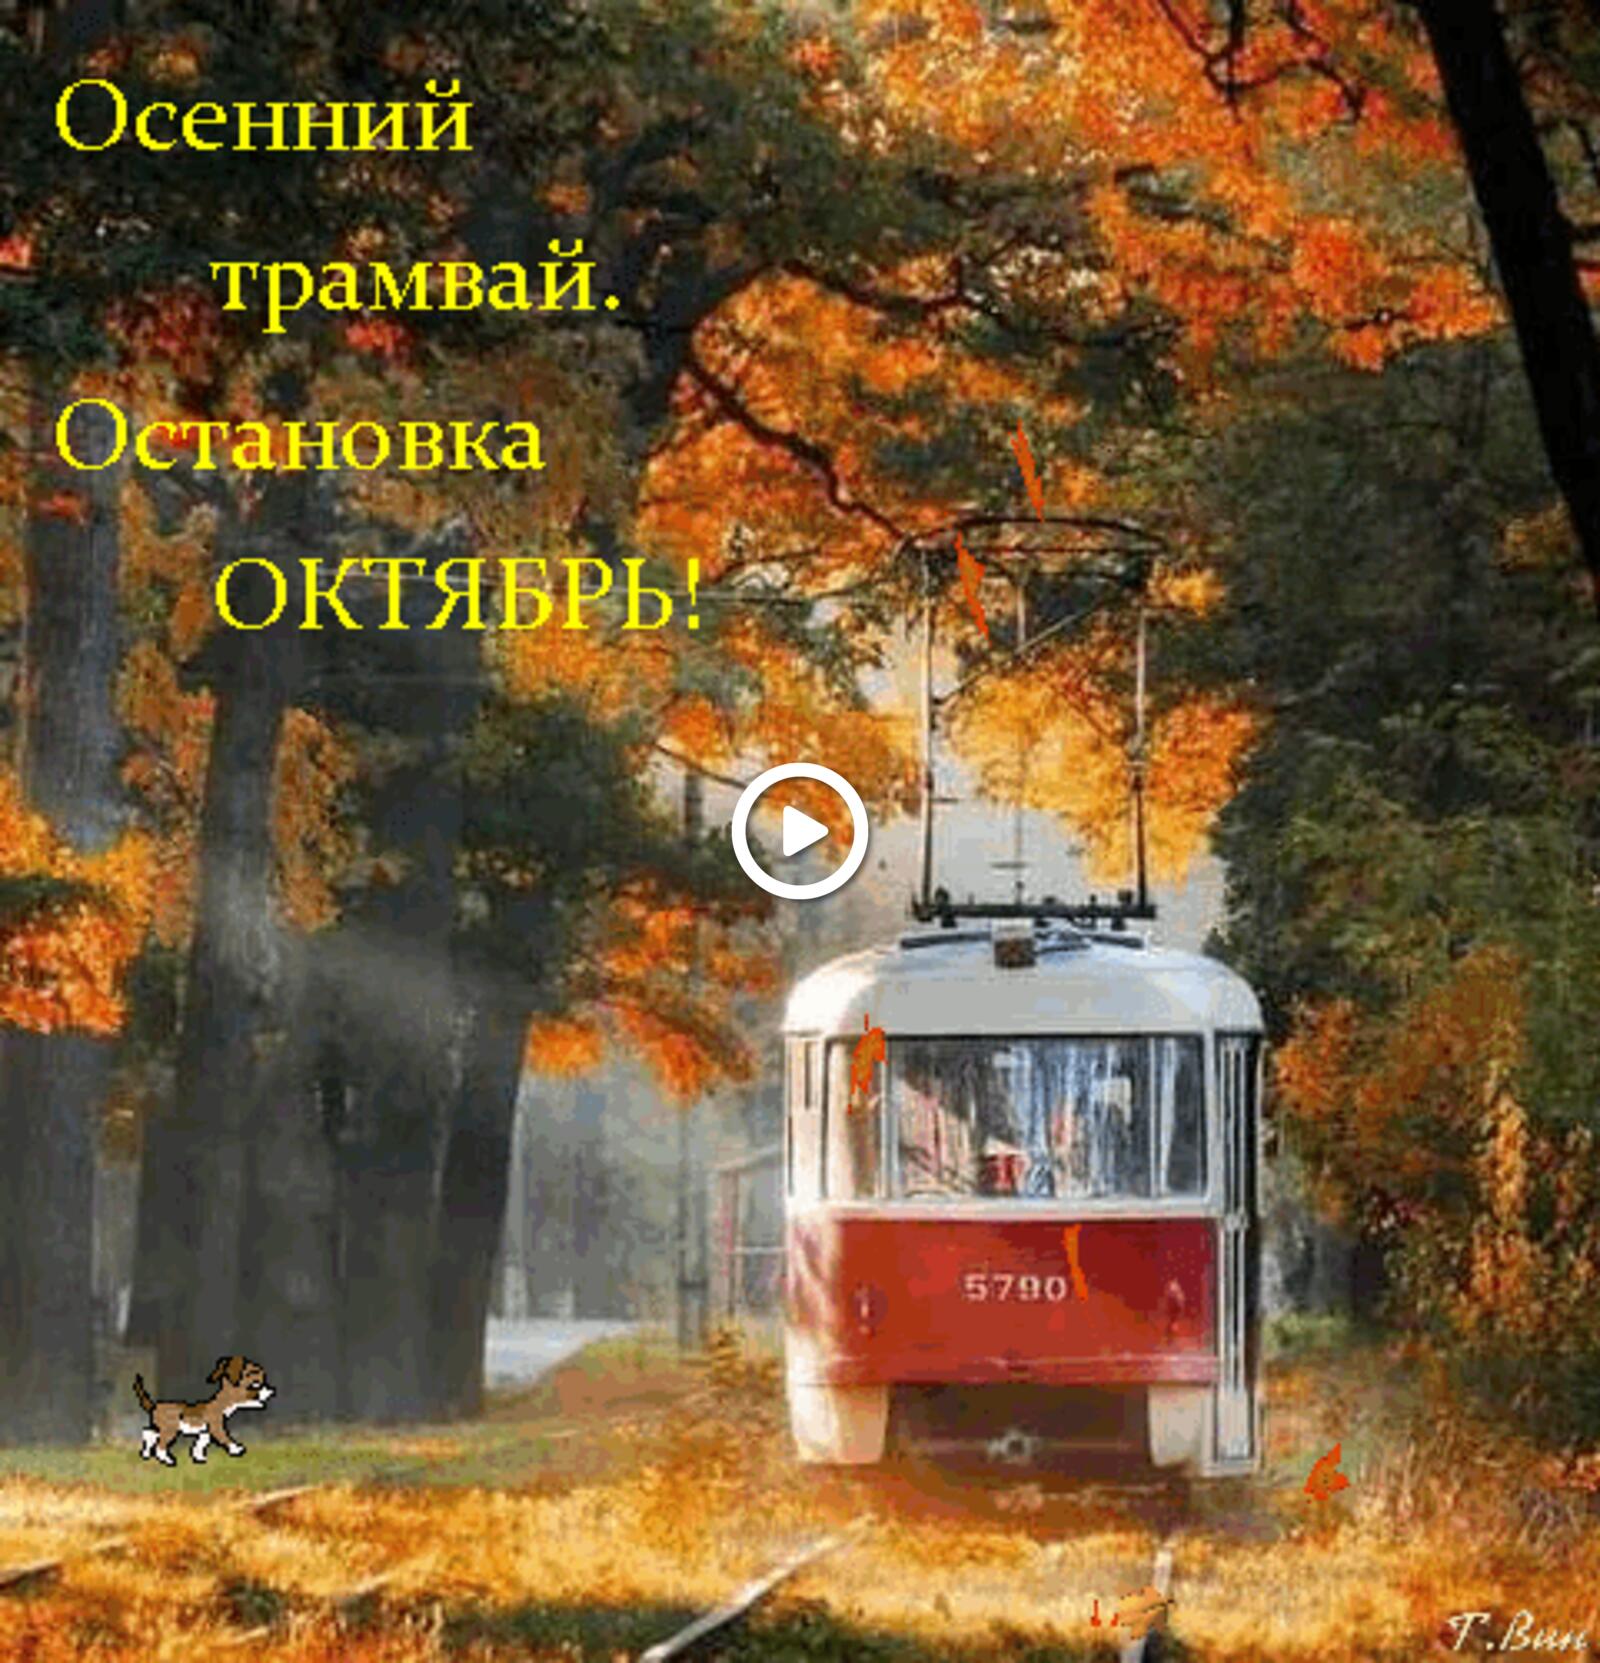 october postcard autumn